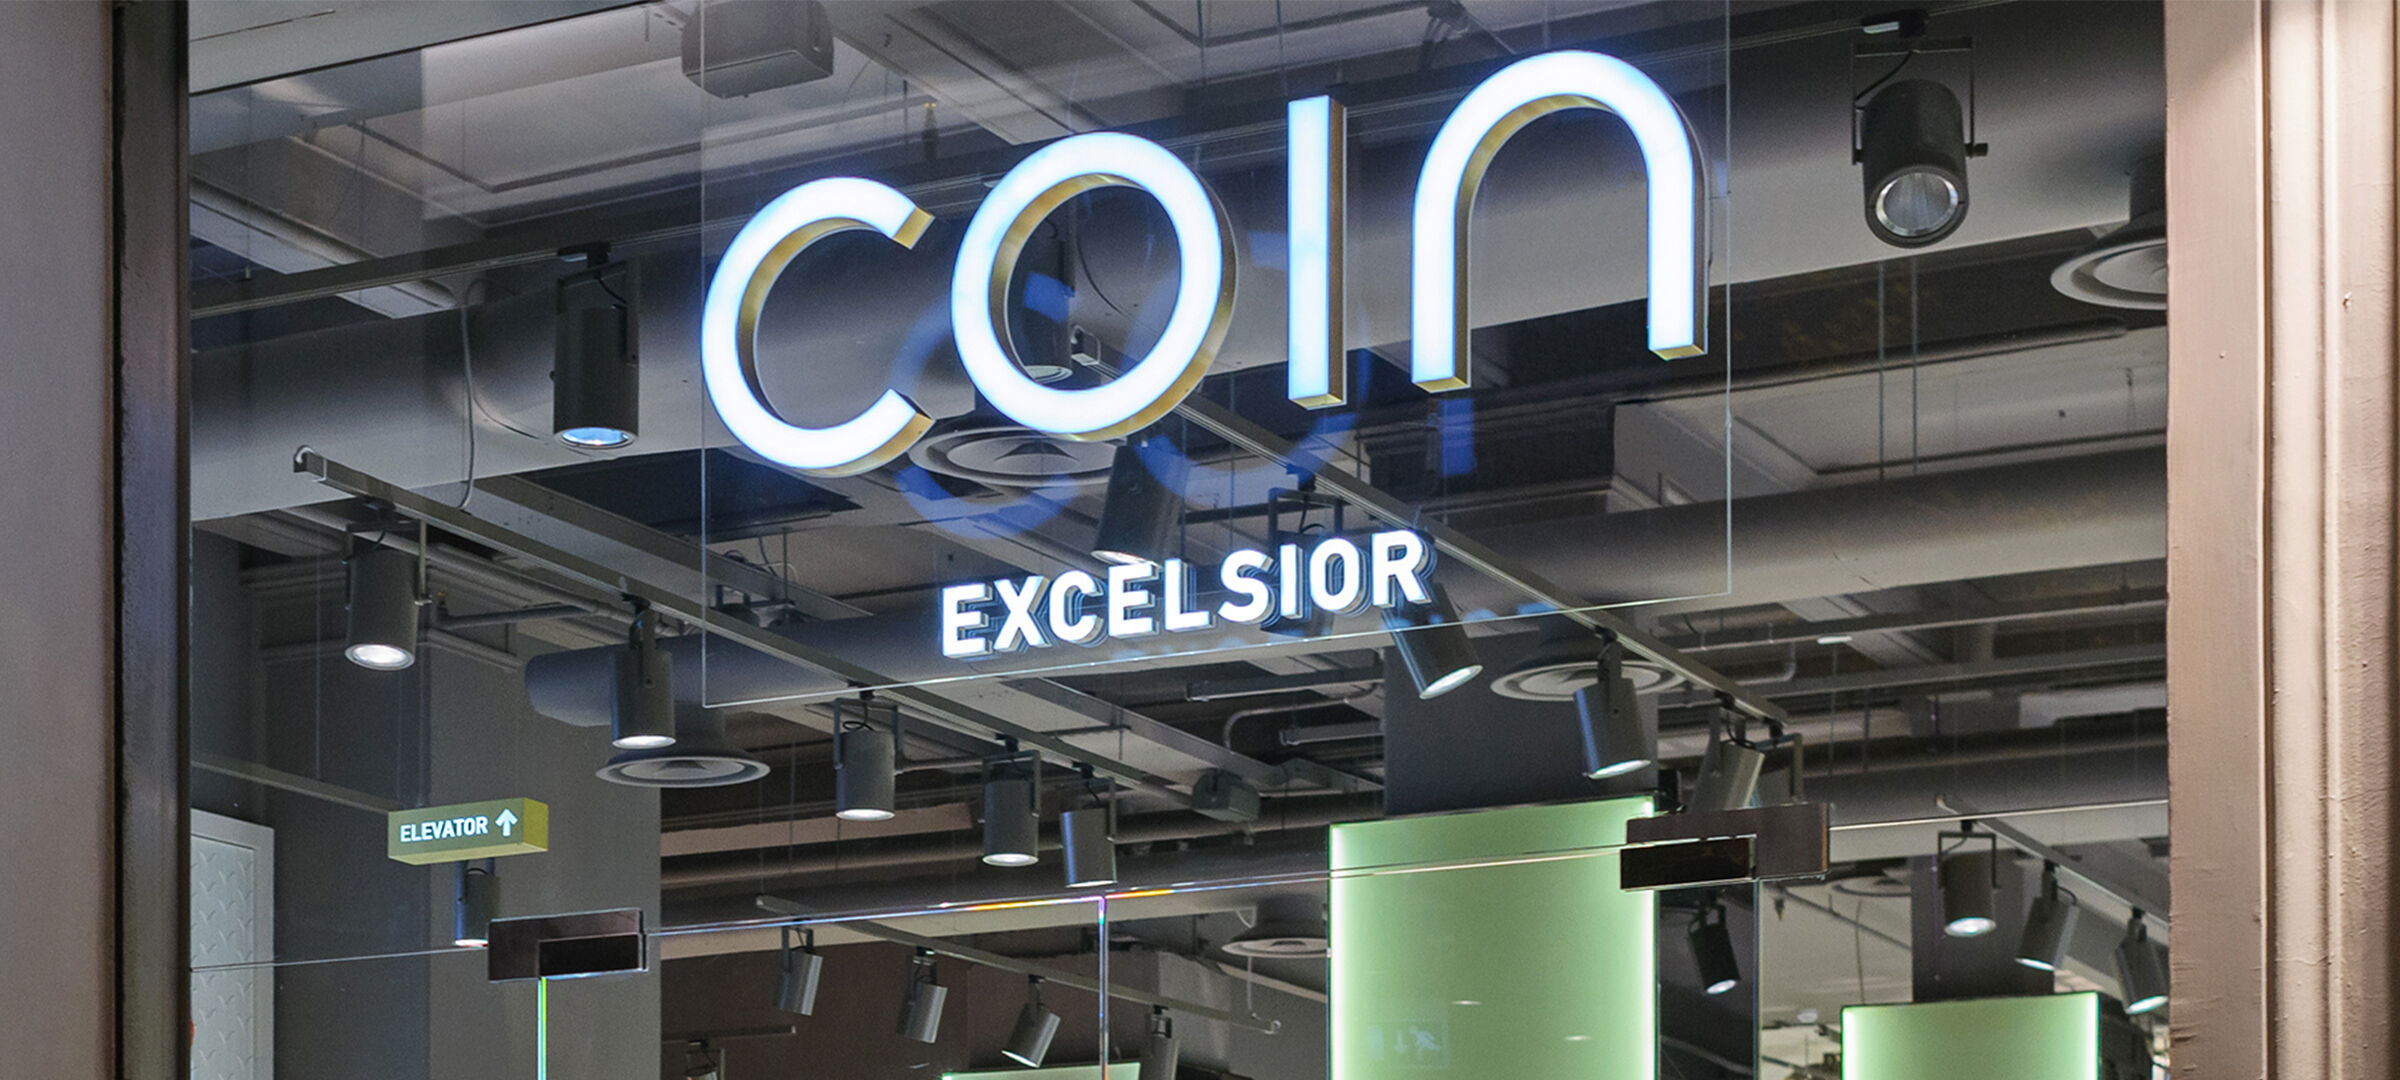 Coin Excelsior